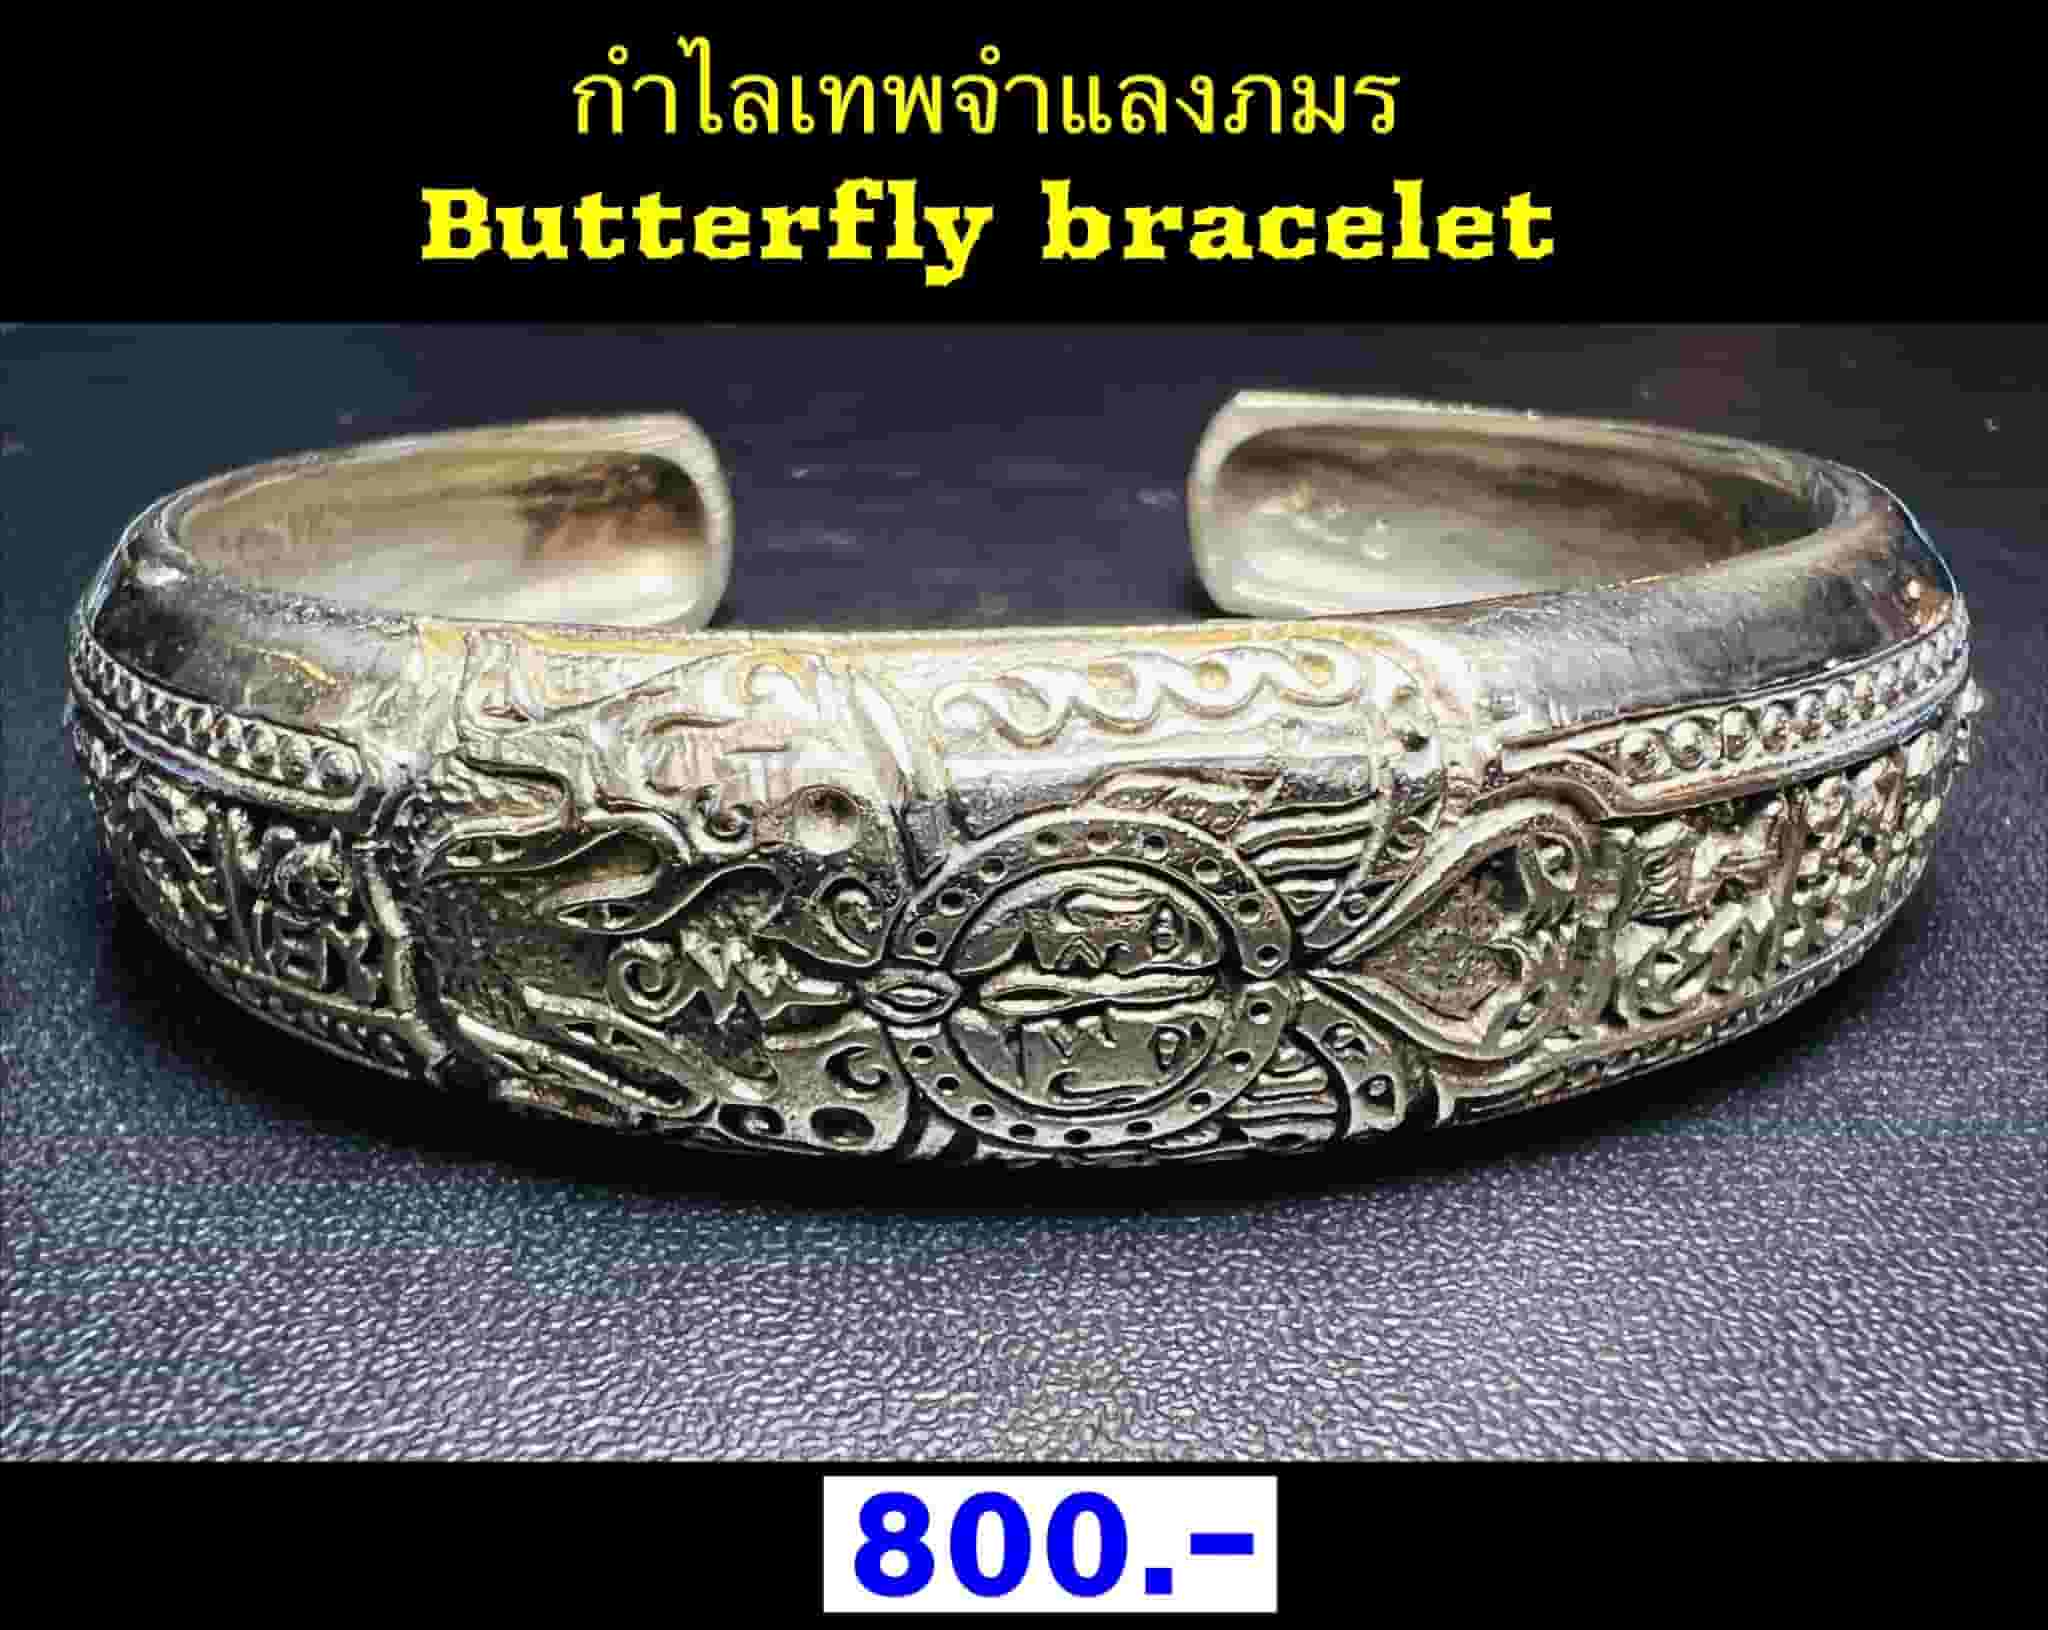 Butterfly Bracelet by Kruba Krissana, Wat Arsom, Nakhon Ratchasima province. - คลิกที่นี่เพื่อดูรูปภาพใหญ่